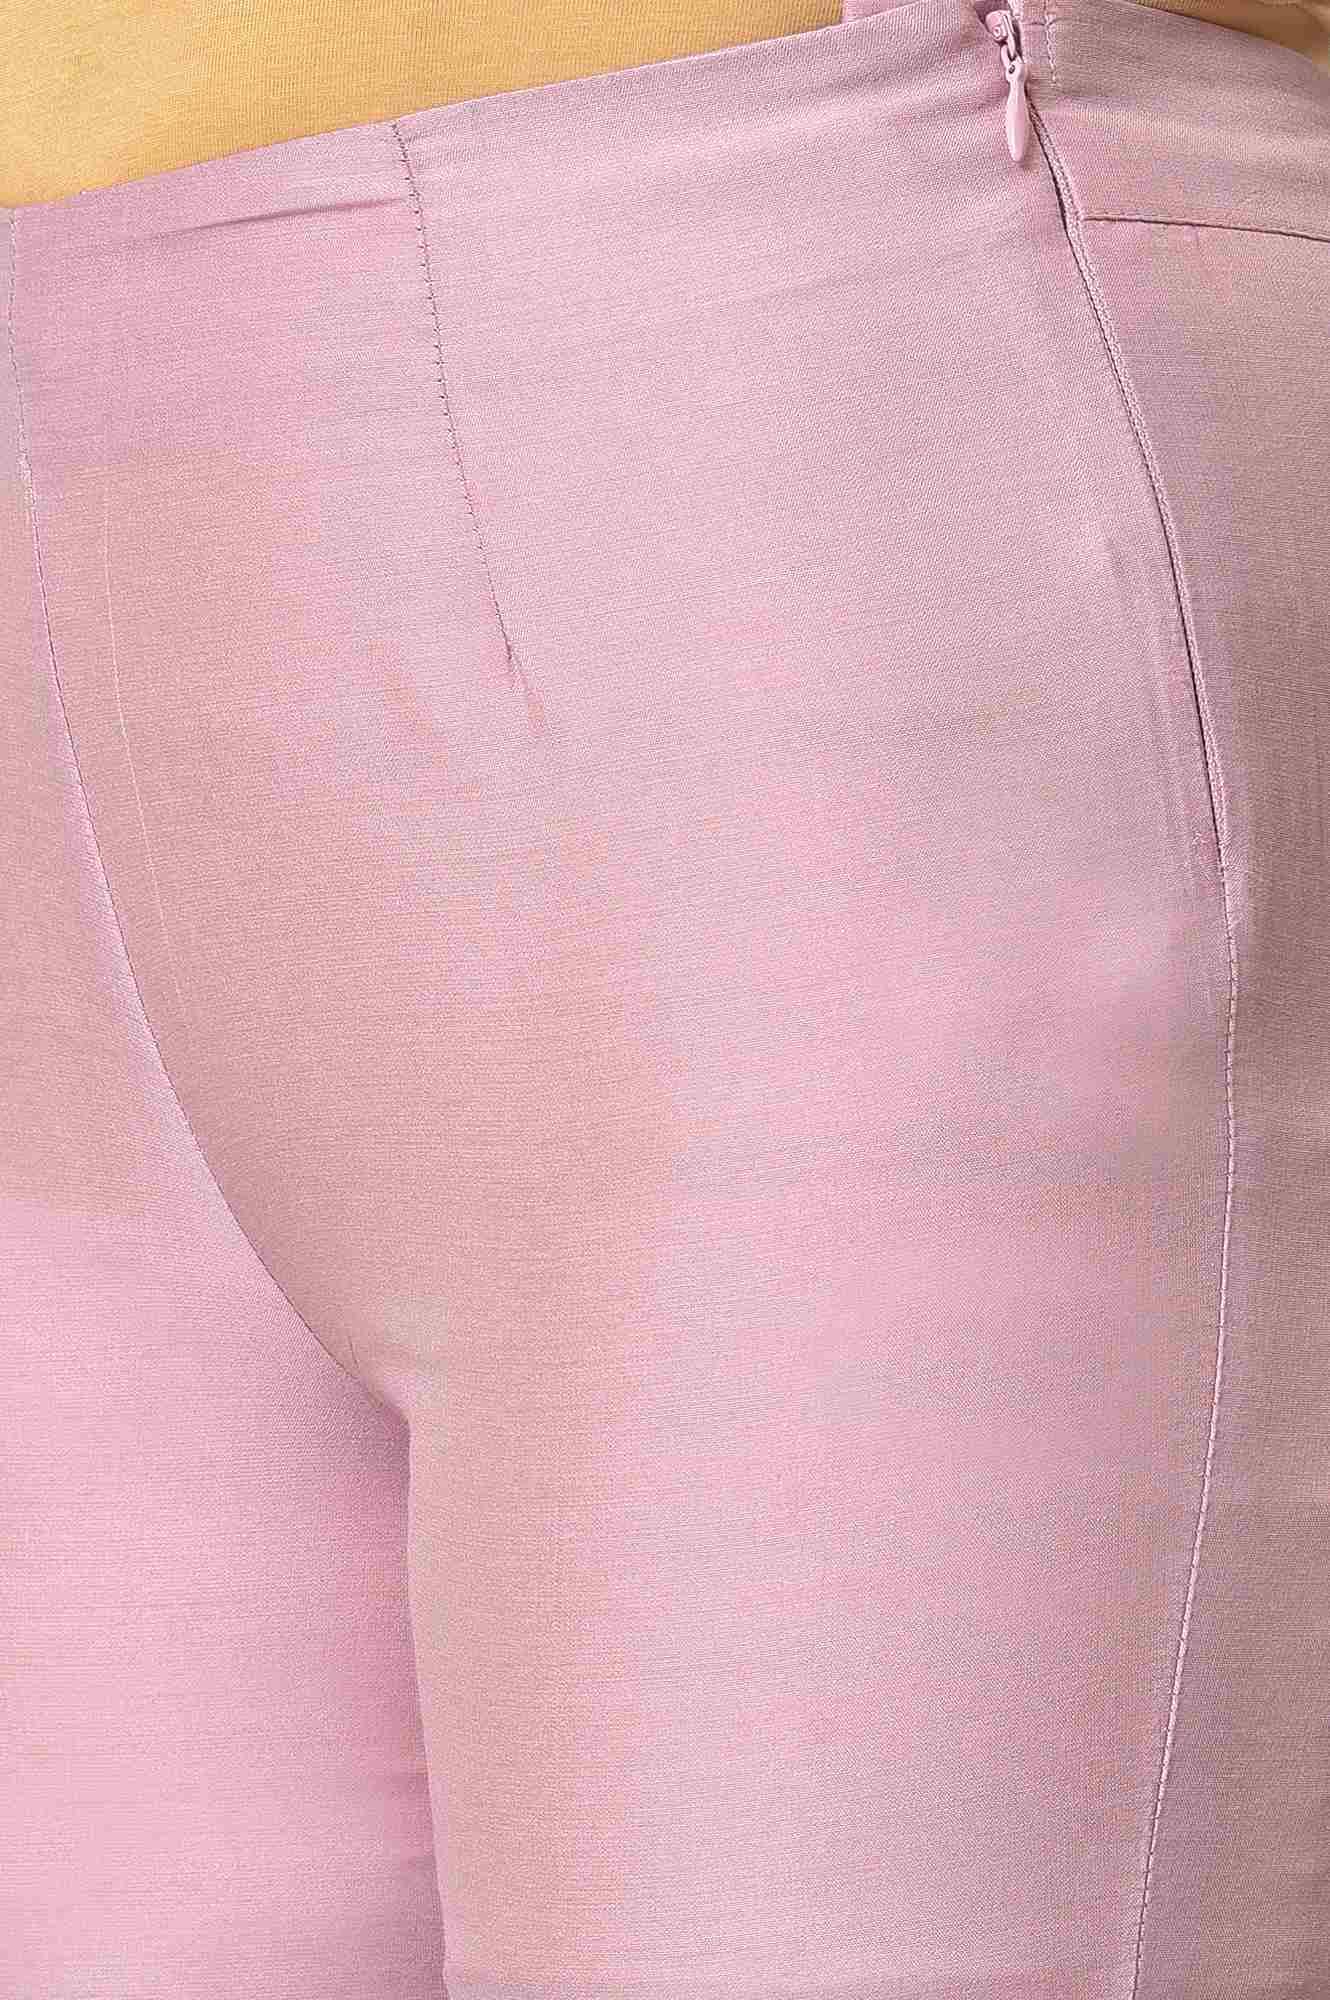 Light Pink Solid Women Slim Pants - wforwoman